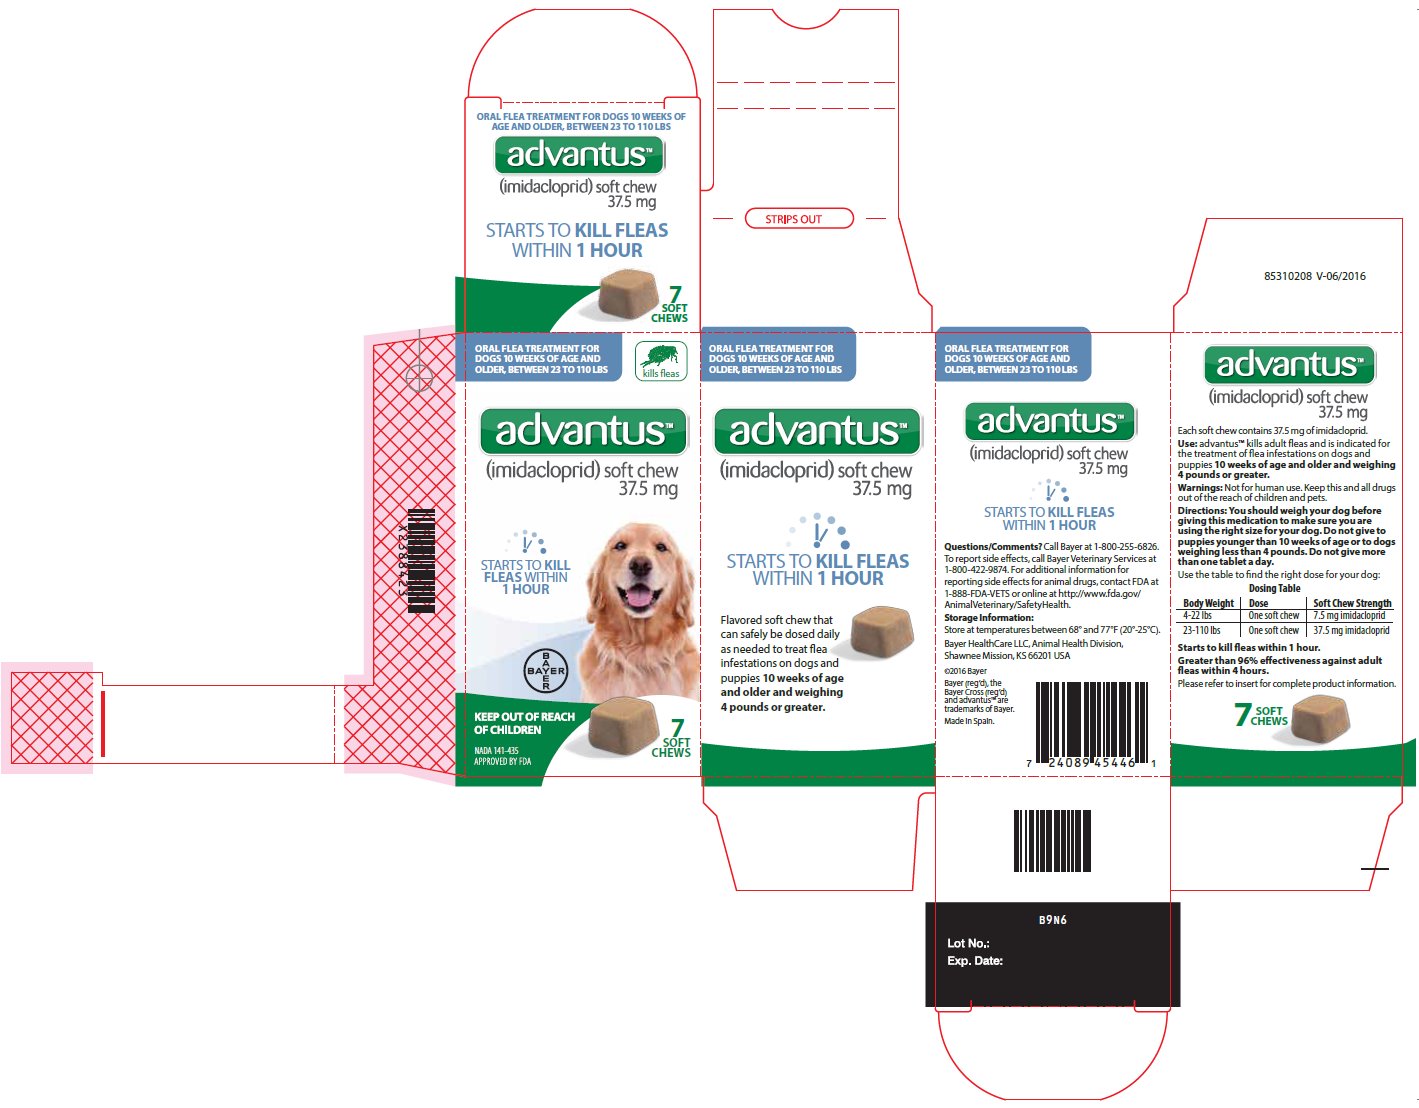 advantus™ (imidacloprid) soft chew 37.5 mg carton label